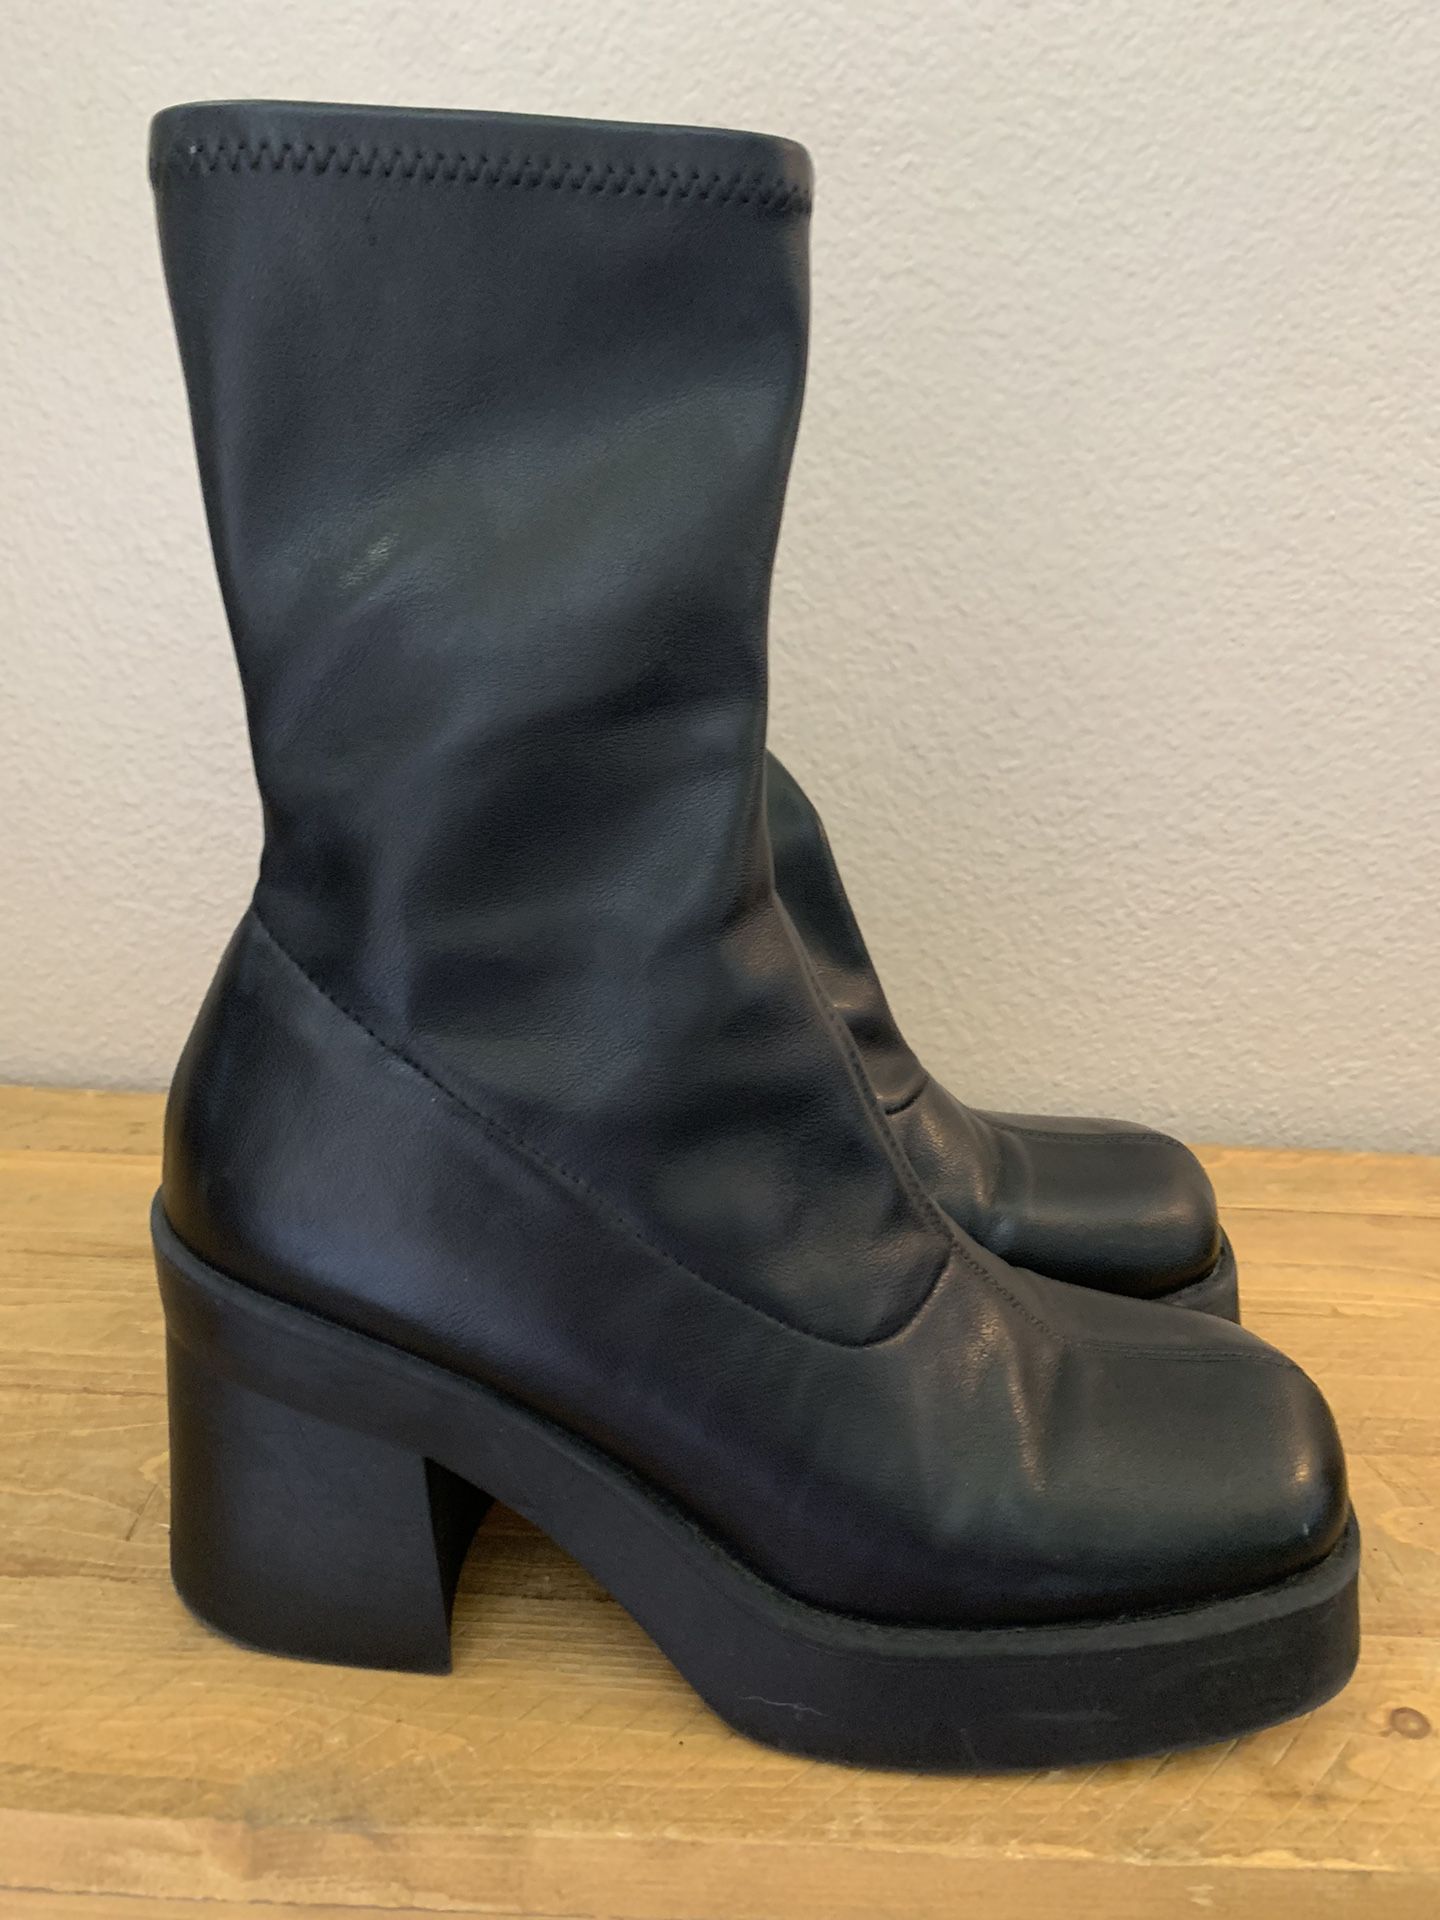 Steve Madden Women's Black Boots Size 8.5